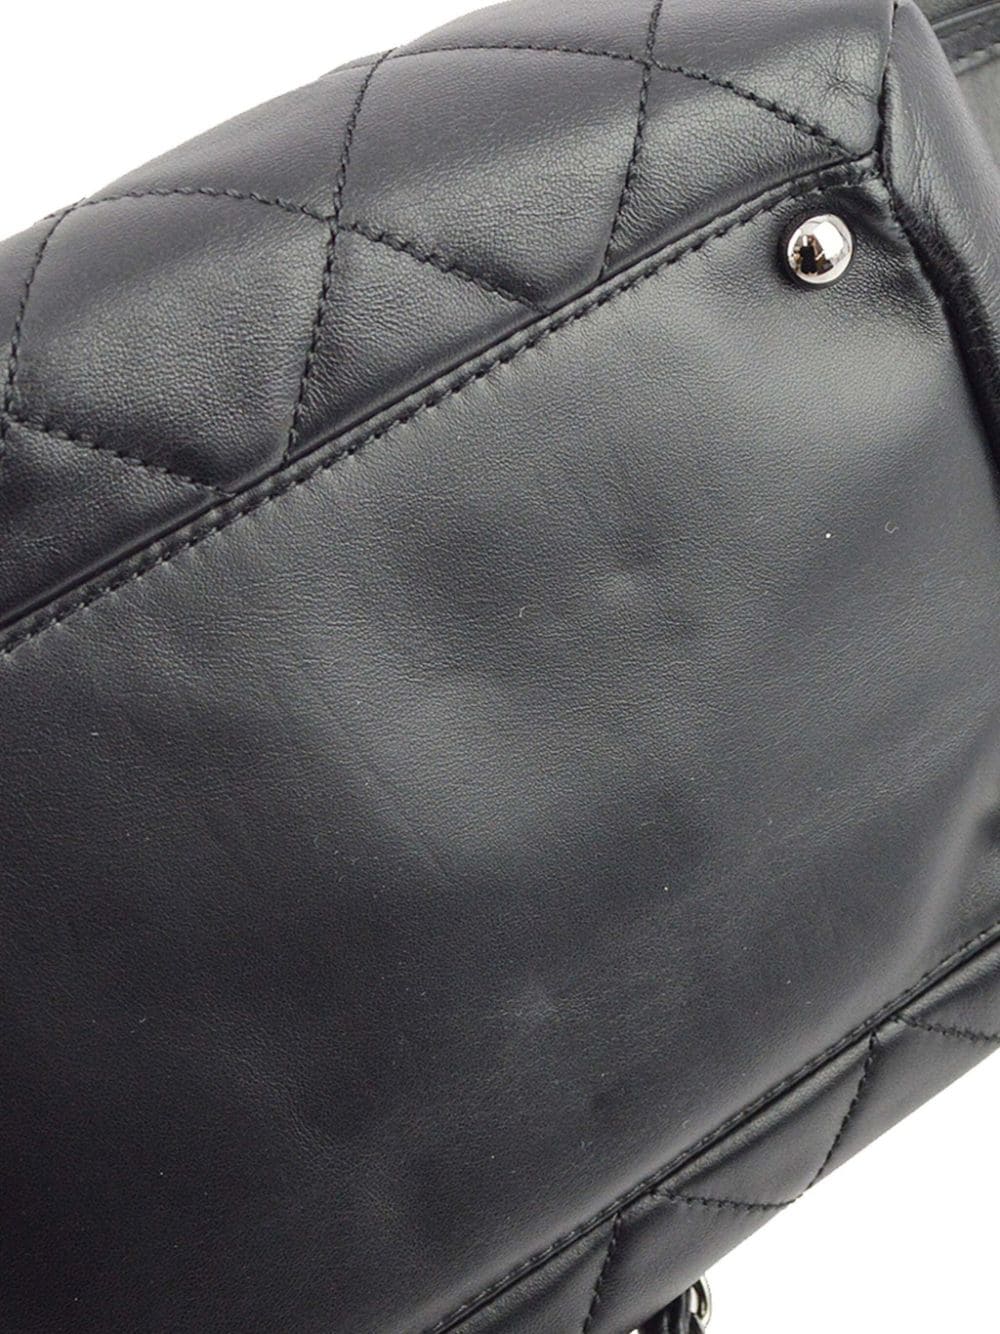 Pre-owned Chanel 2007 Just Mademoiselle Leather Shoulder Bag In Black